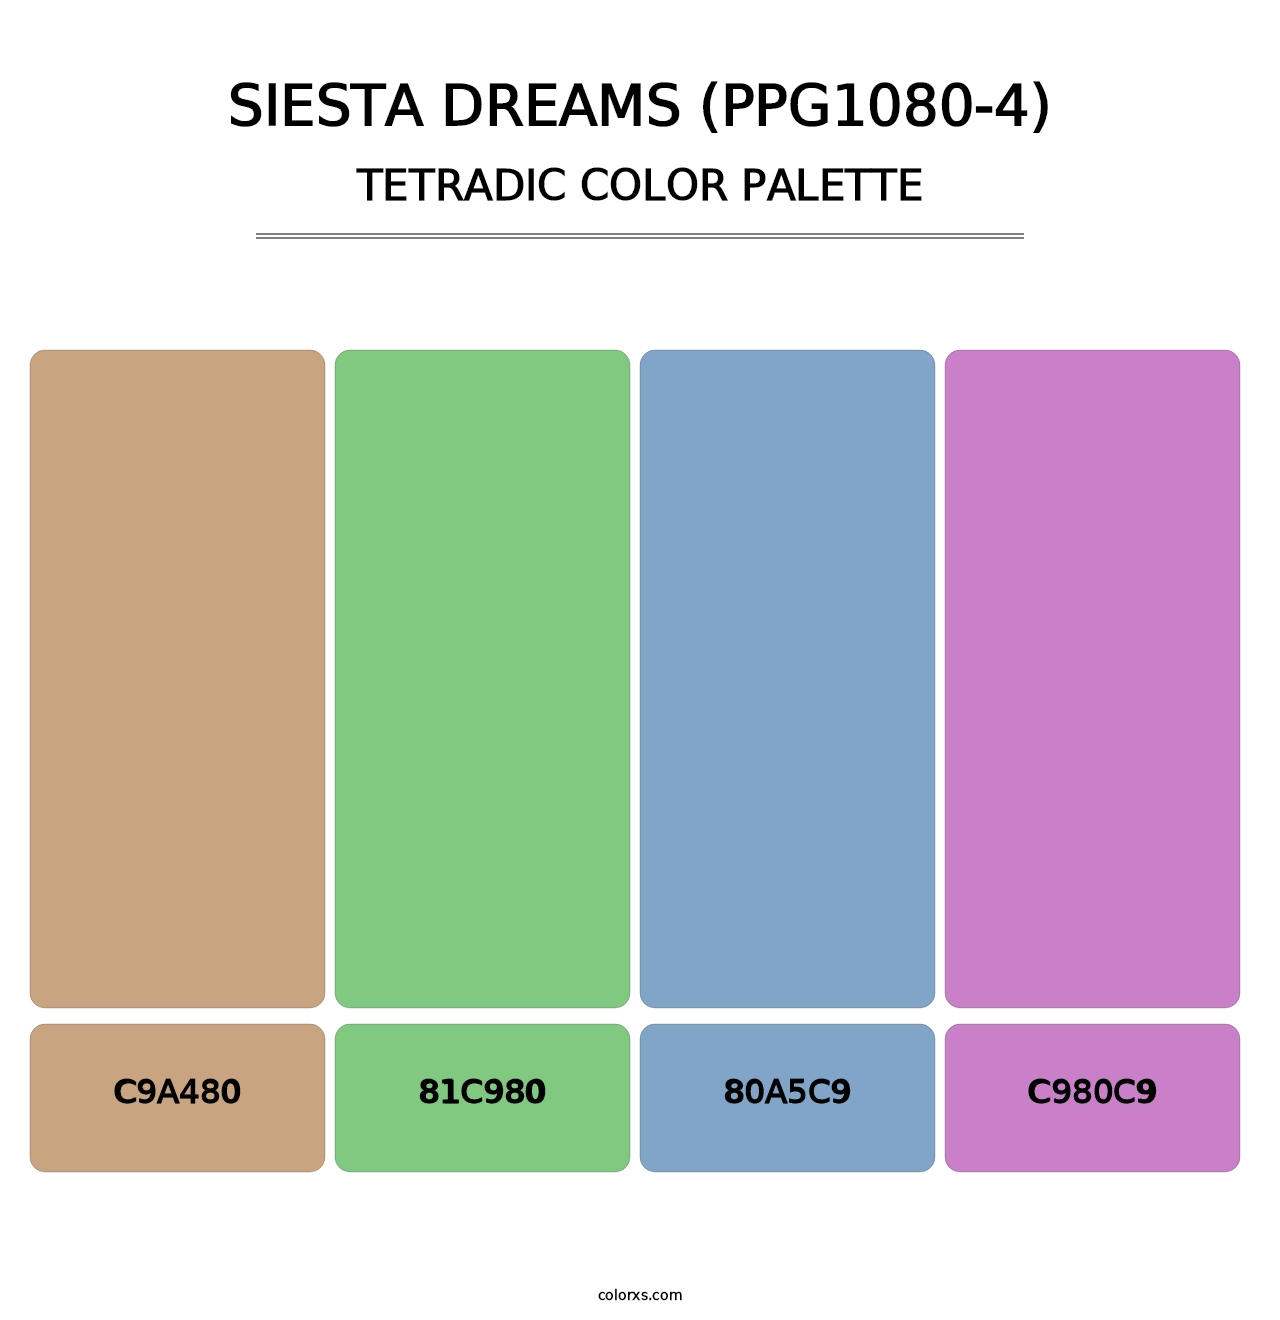 Siesta Dreams (PPG1080-4) - Tetradic Color Palette